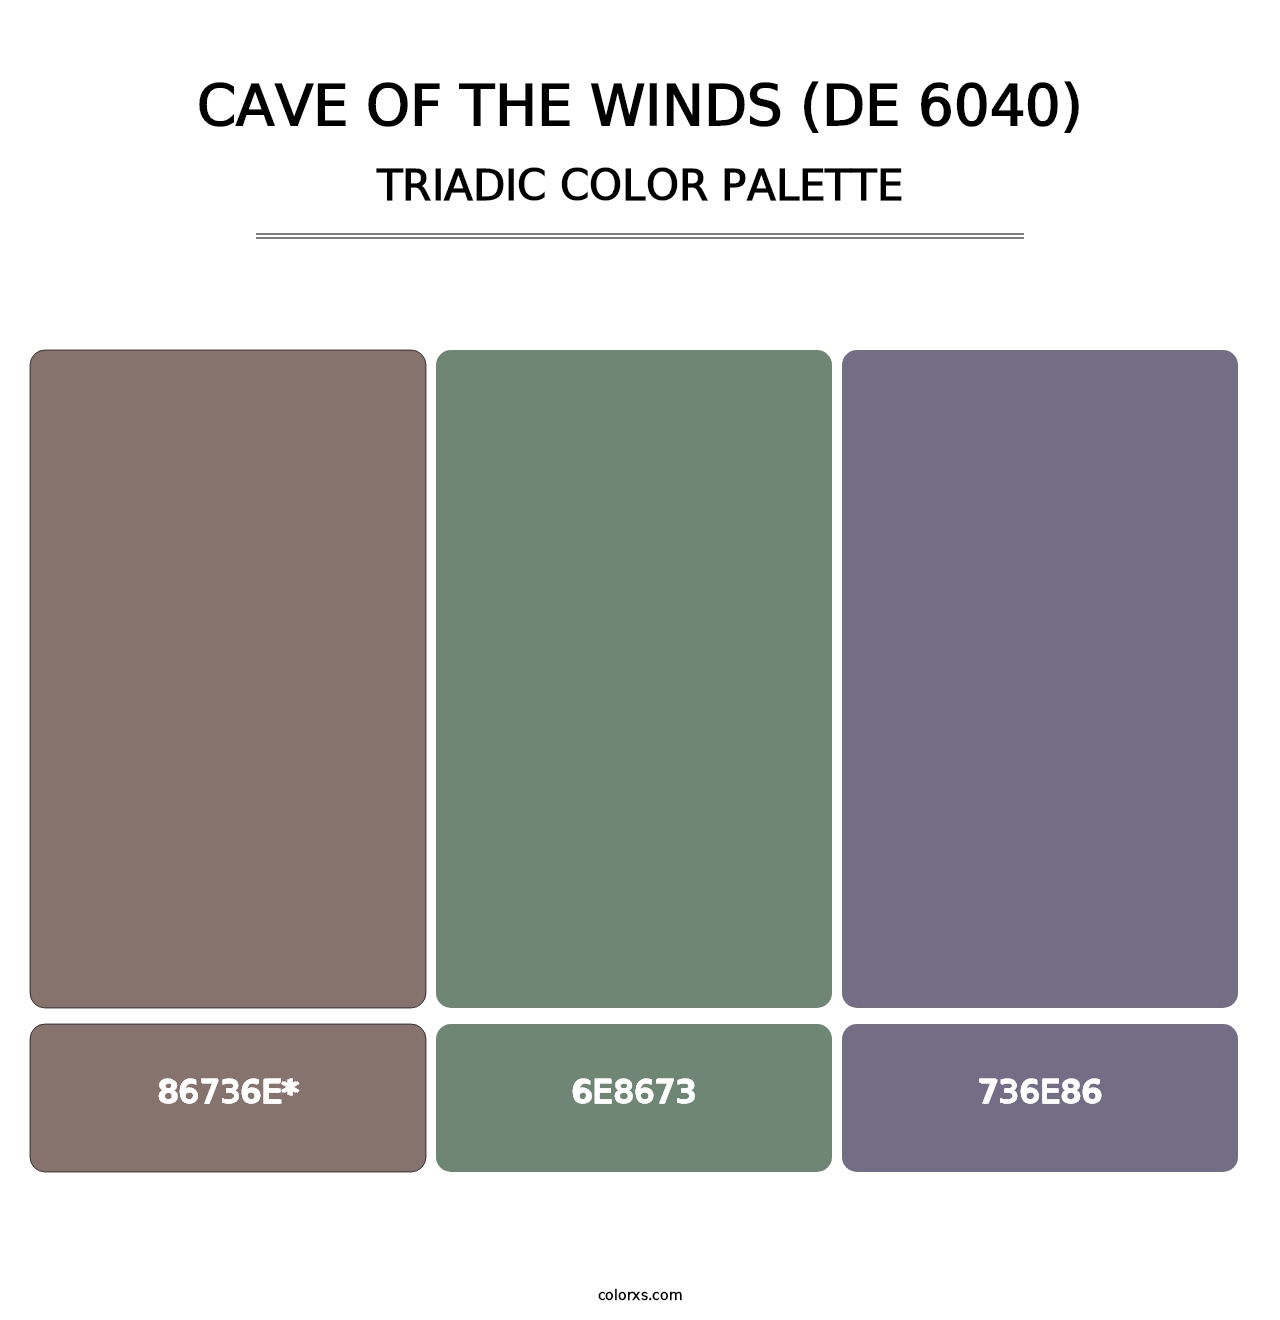 Cave of the Winds (DE 6040) - Triadic Color Palette